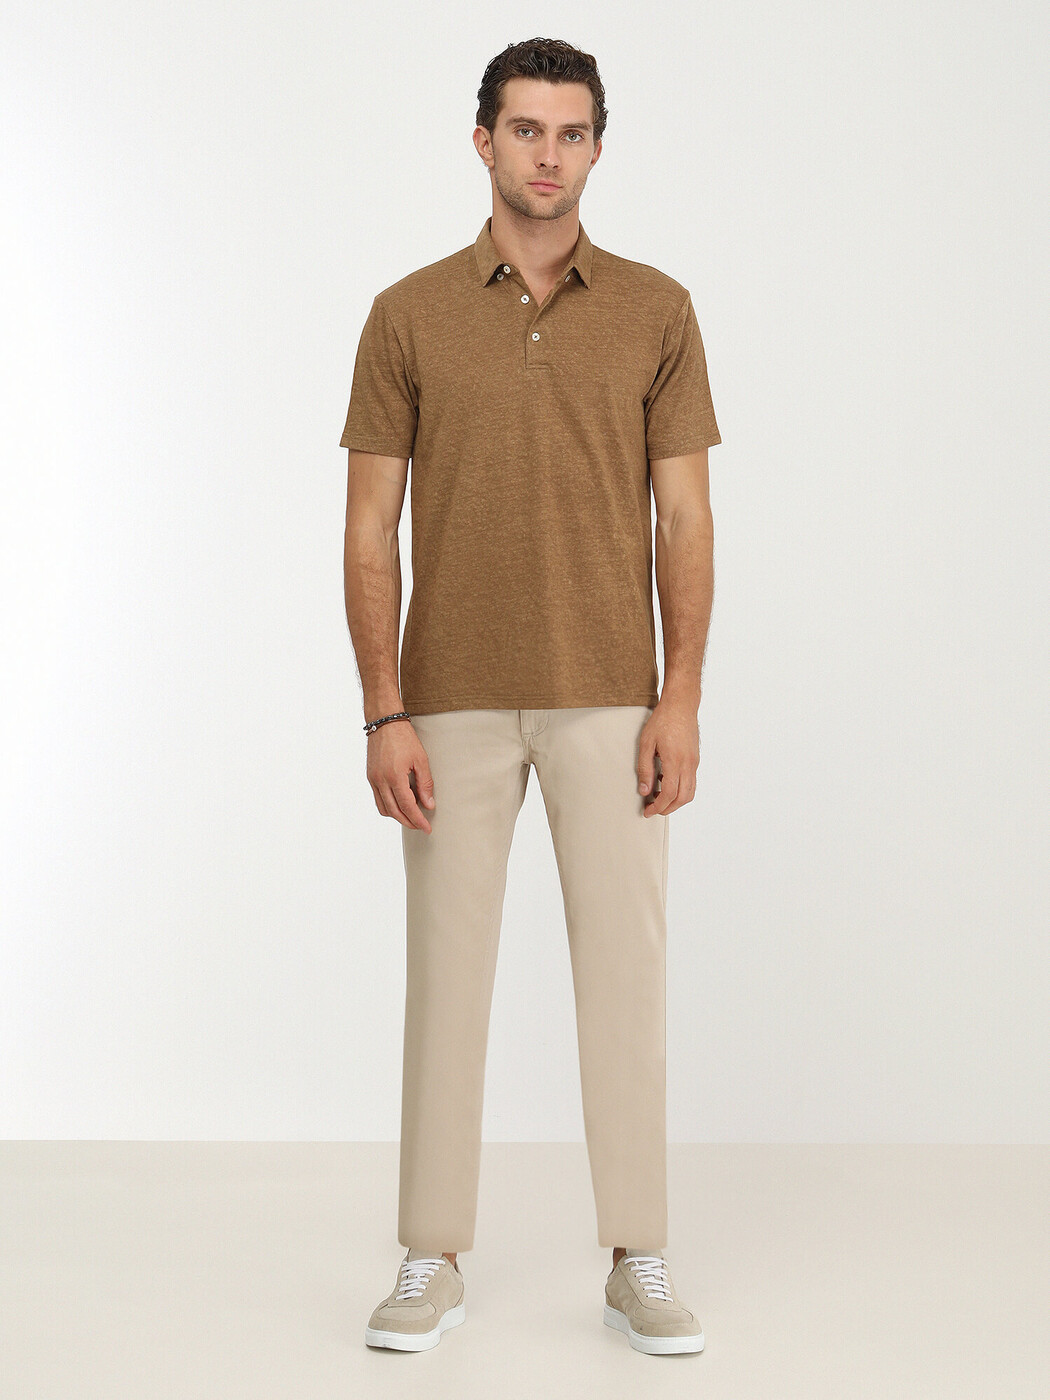 KİP - Kahverengi Düz Polo Yaka Pamuk Karışımlı T-Shirt (1)